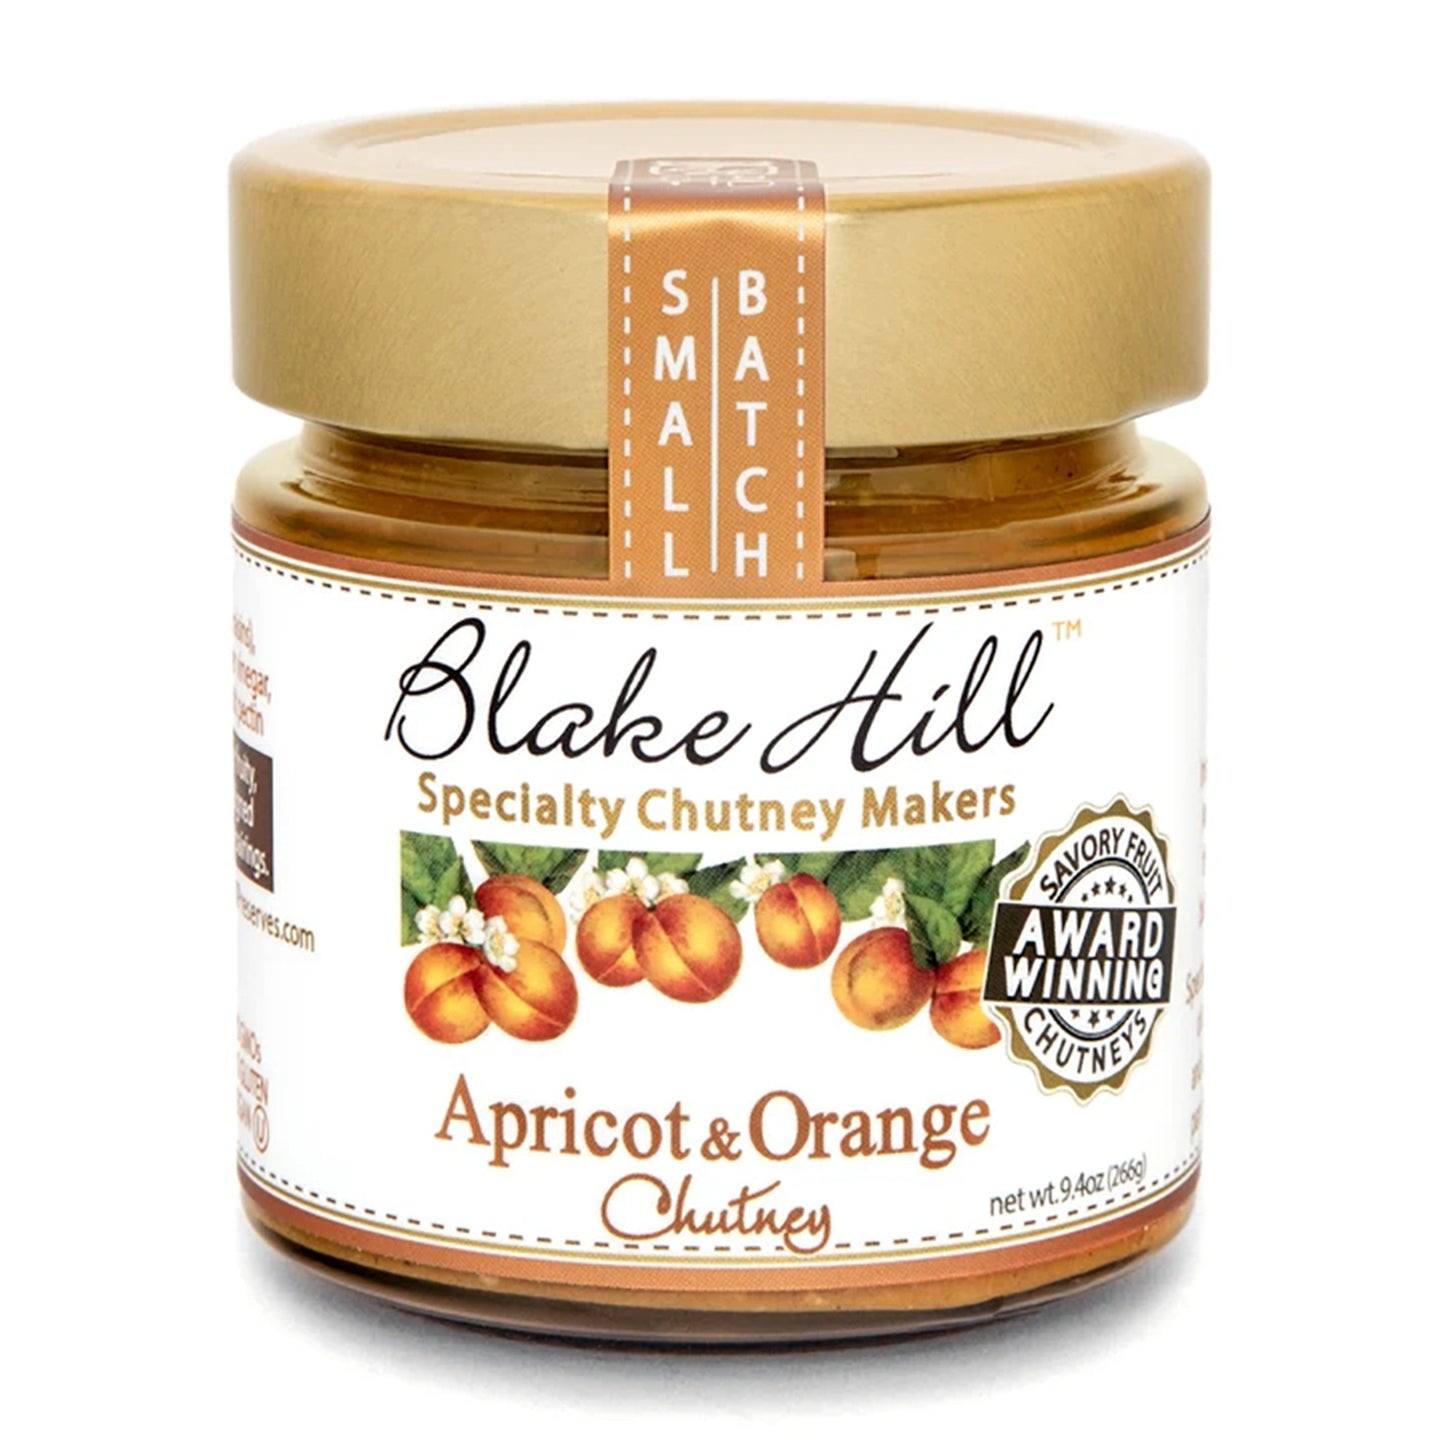 Blake Hill Apricot & Orange Chutney